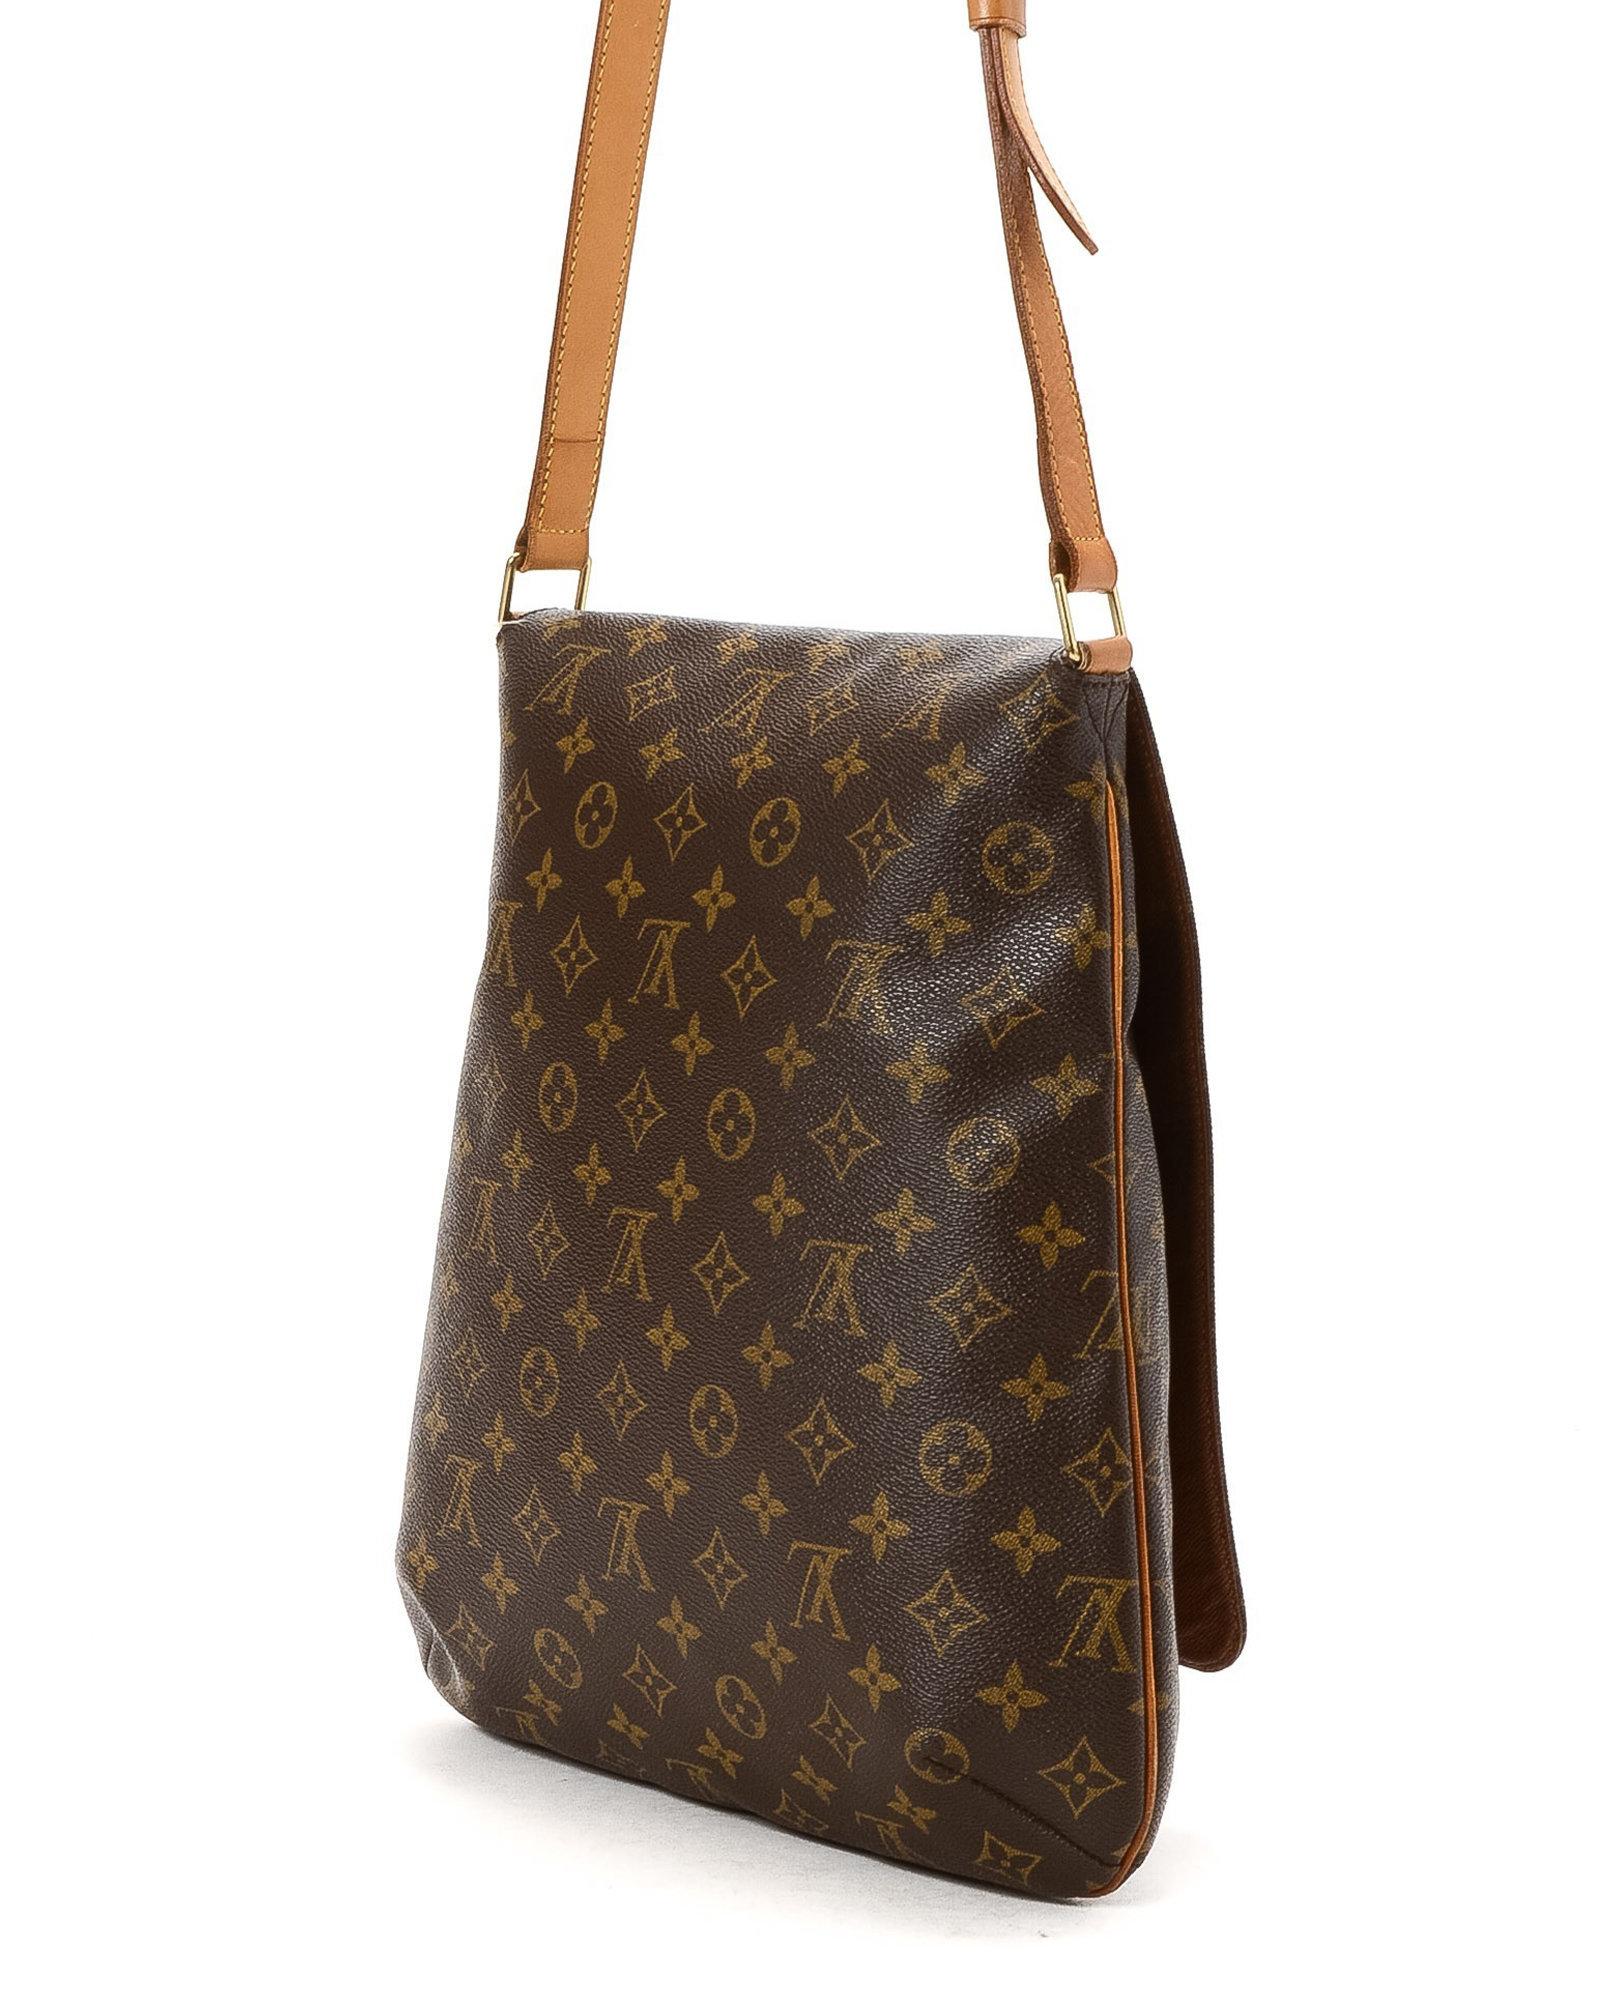 Lyst - Louis Vuitton Musette Messenger Bag - Vintage in Brown